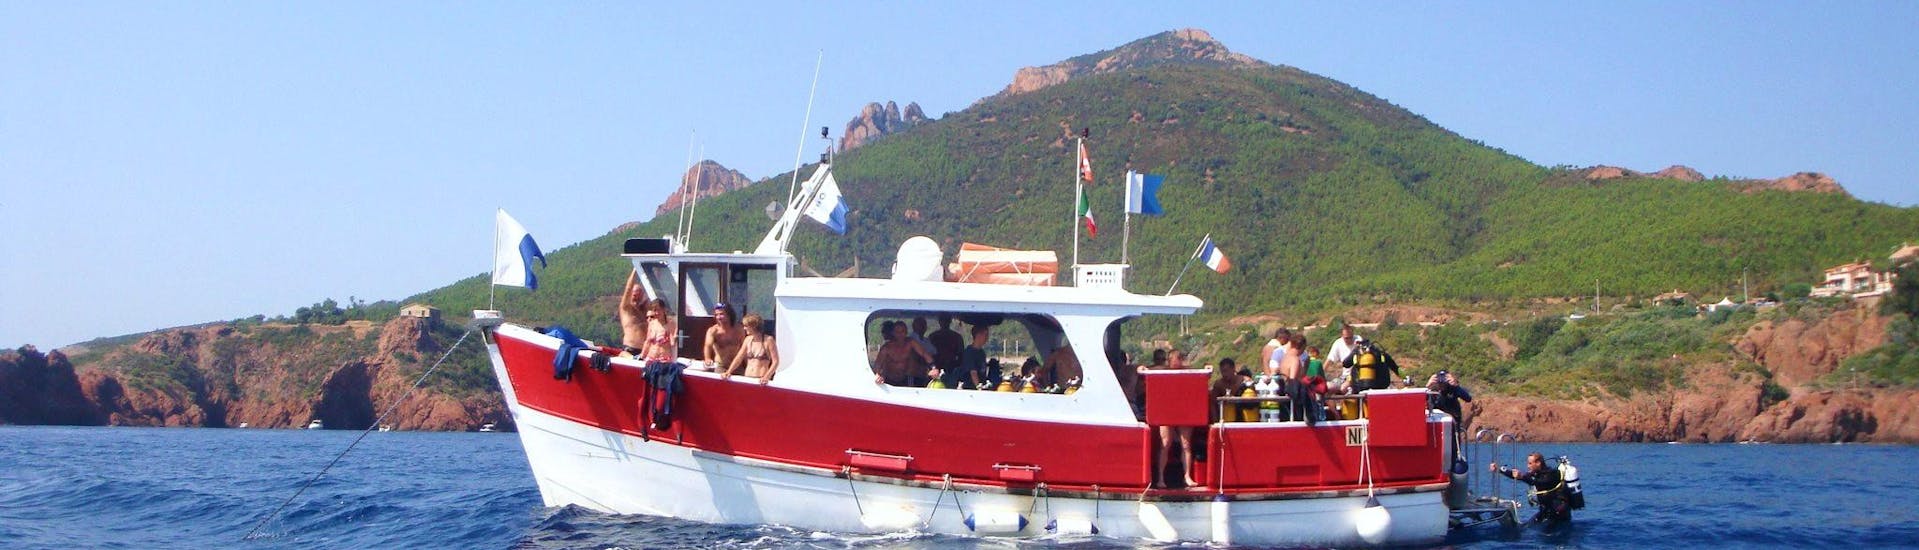 Vista della barca del Dive Centre La Rague durante la Gita in barca vicino a Cannes con snorkeling.